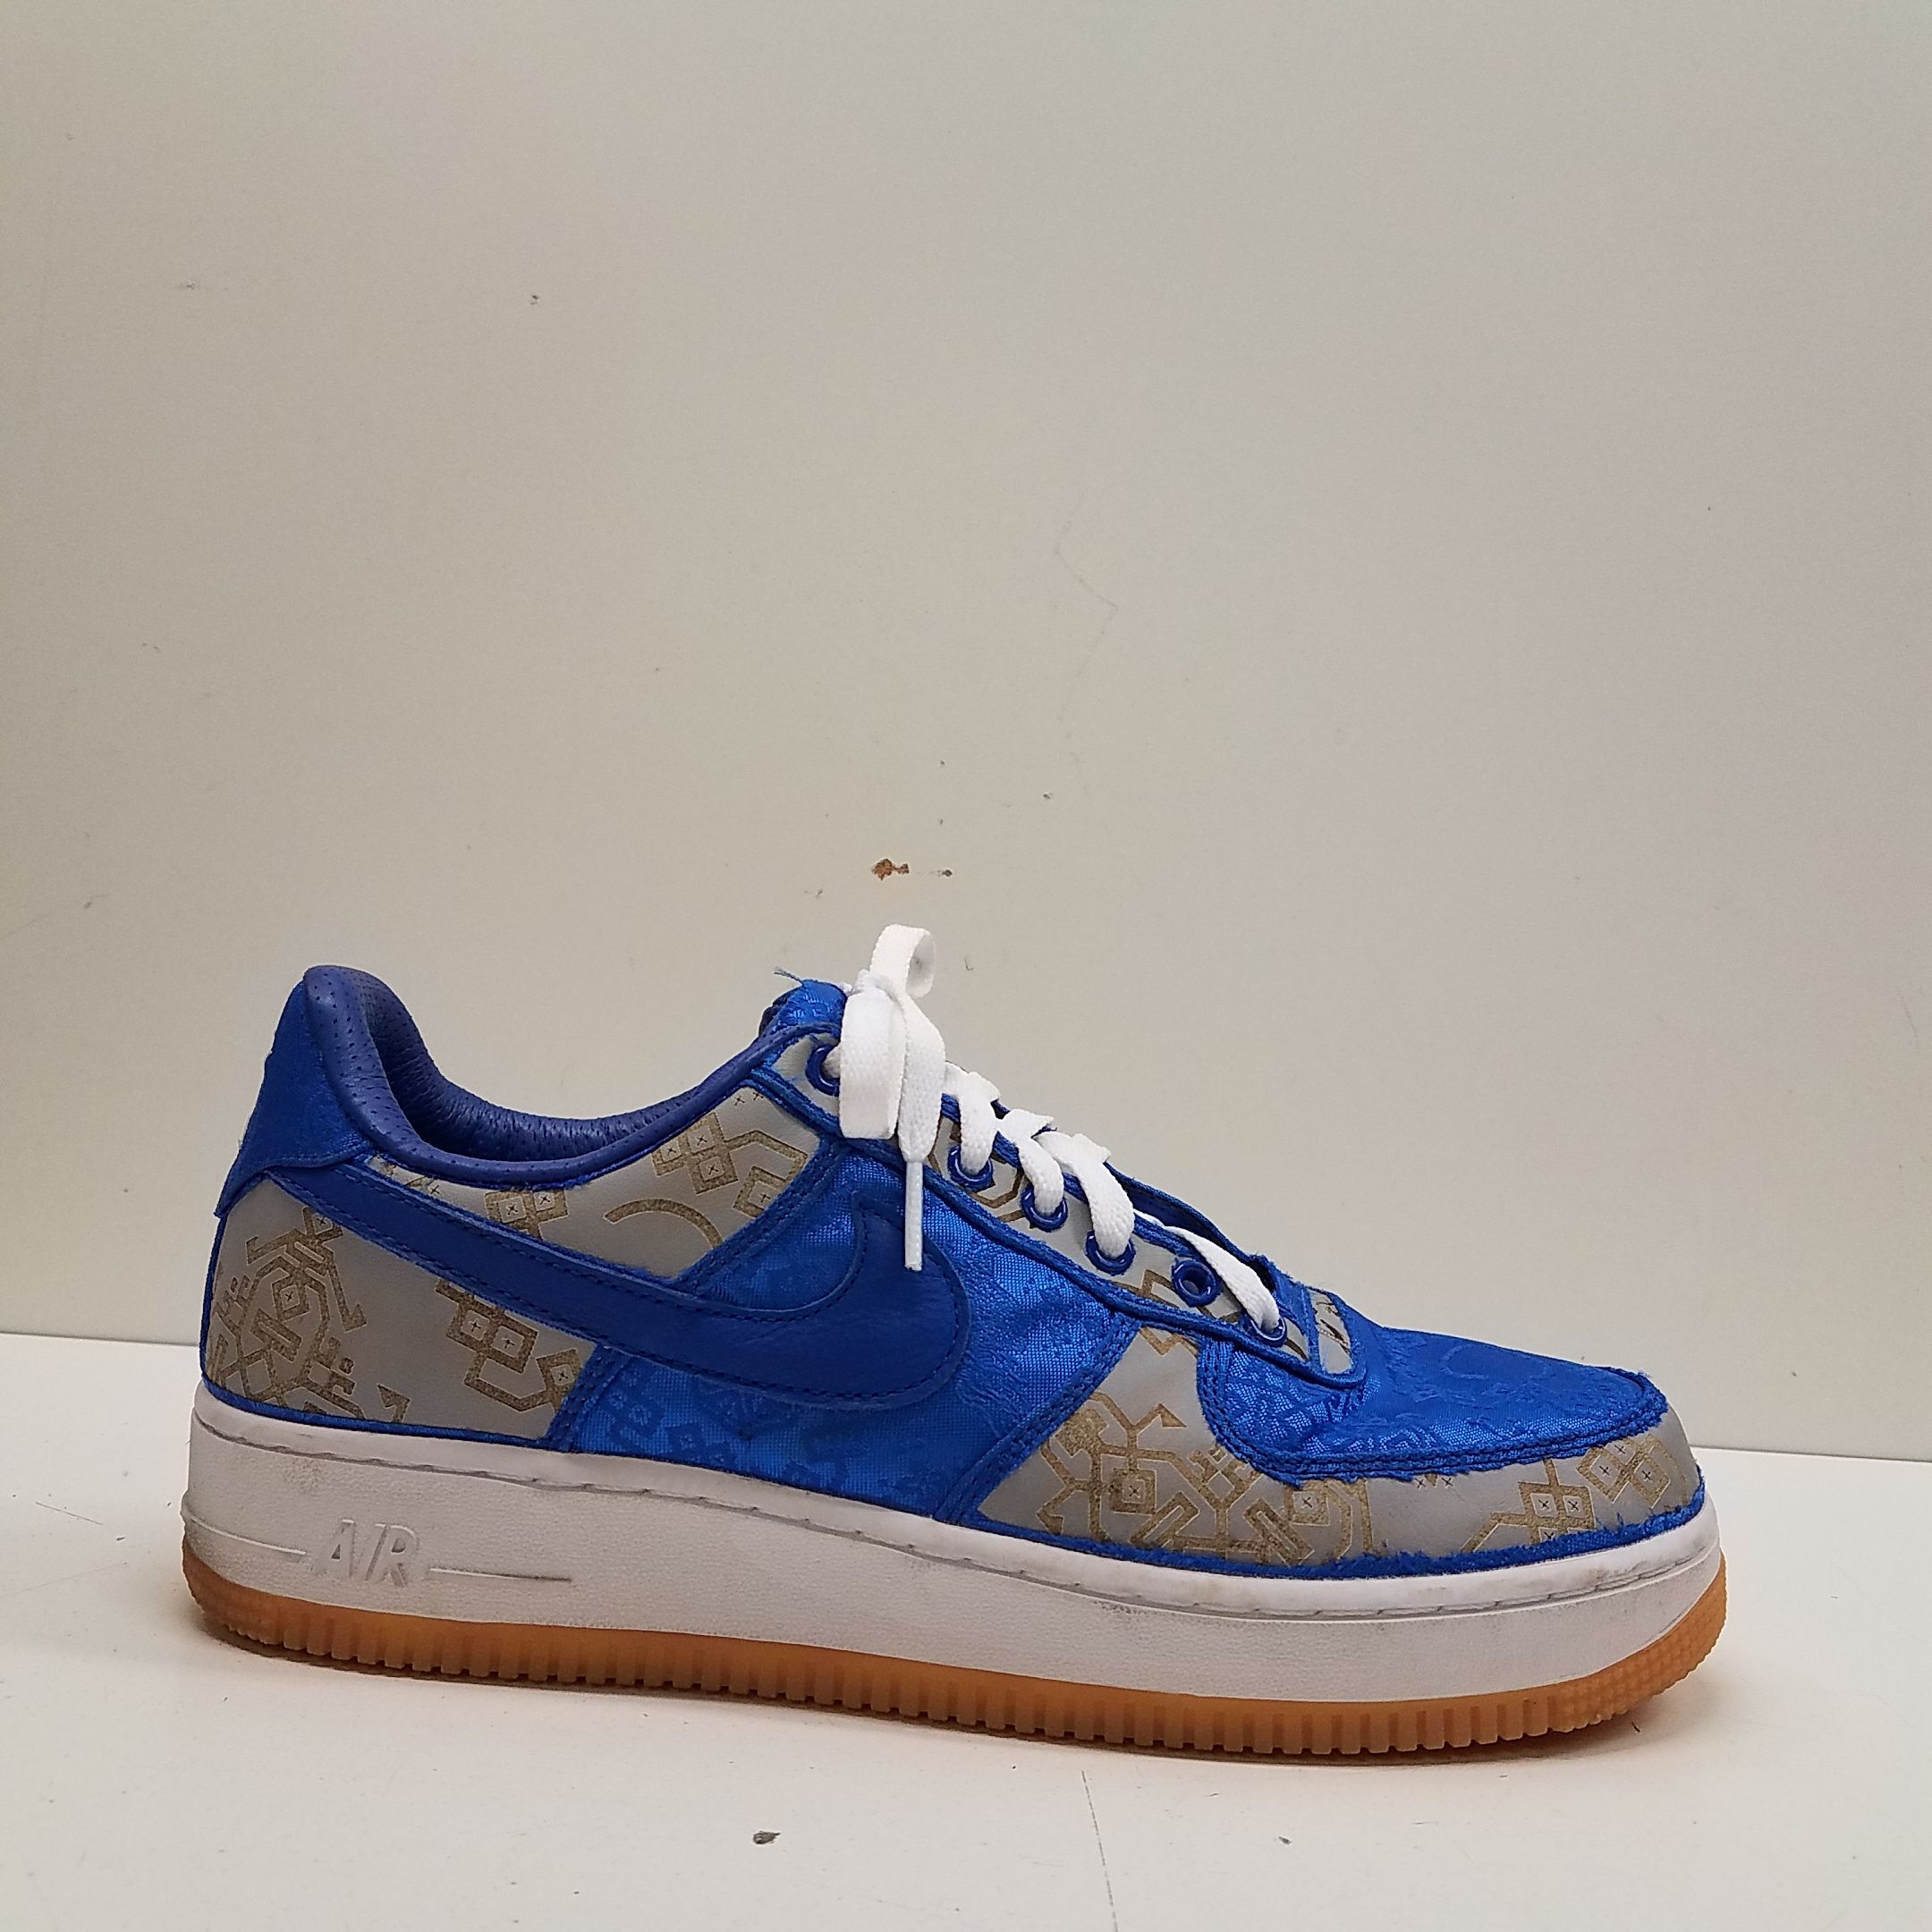 Buy the Nike Air Force 1 Clot CJ5290-400 Blue Men's Size 10.5 ...